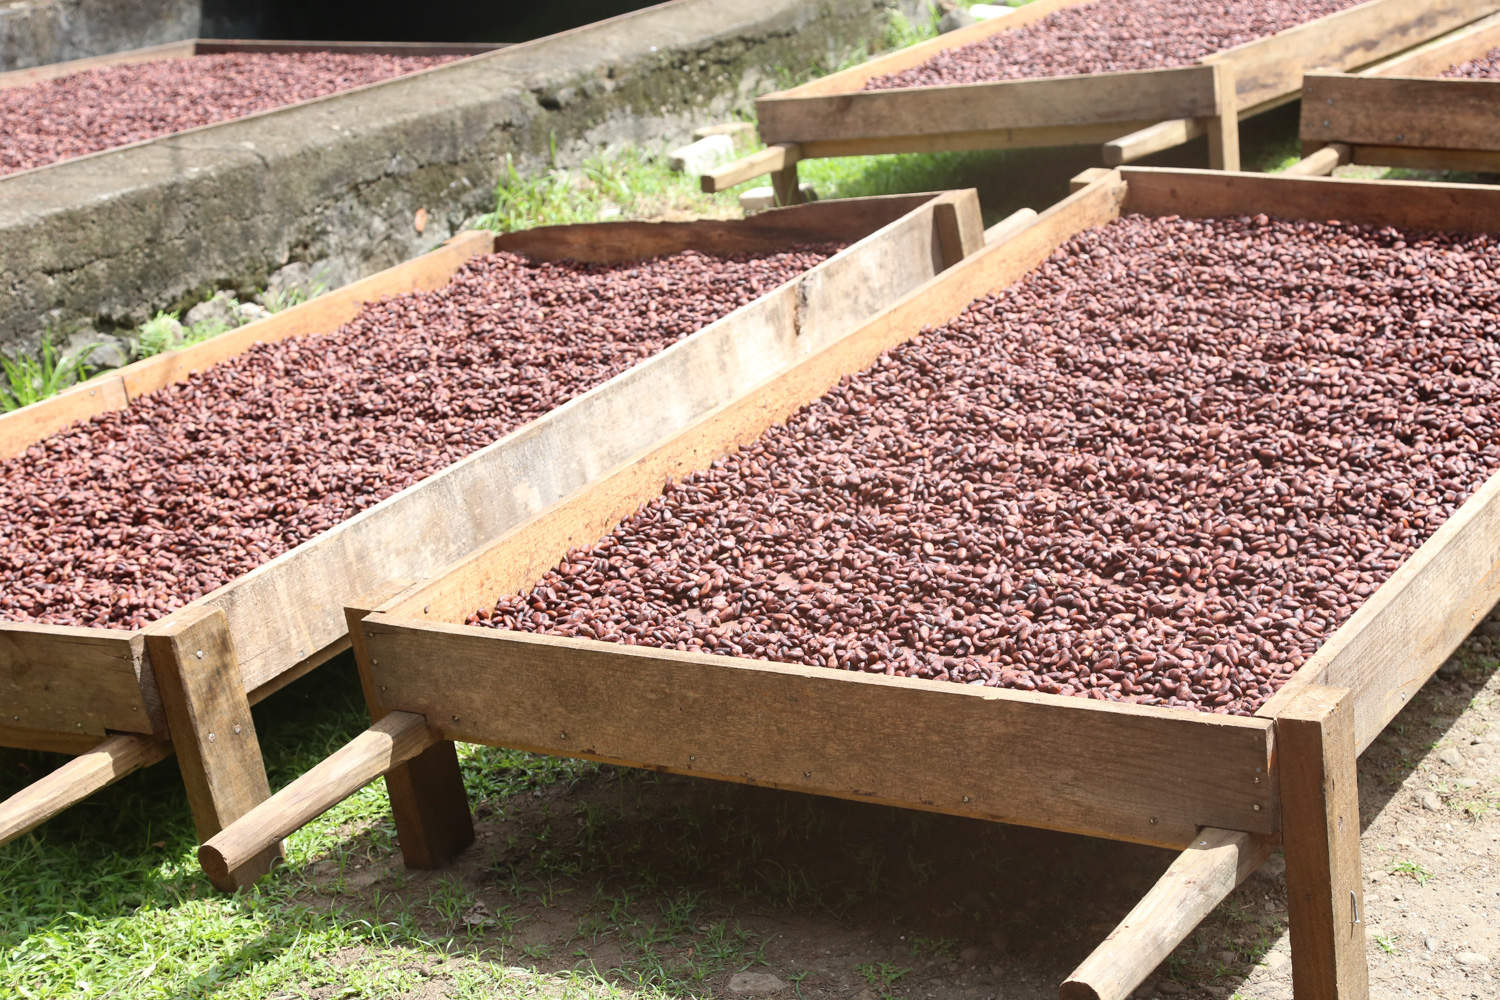 Exploring Grenada One Cacao Plantation at a Time